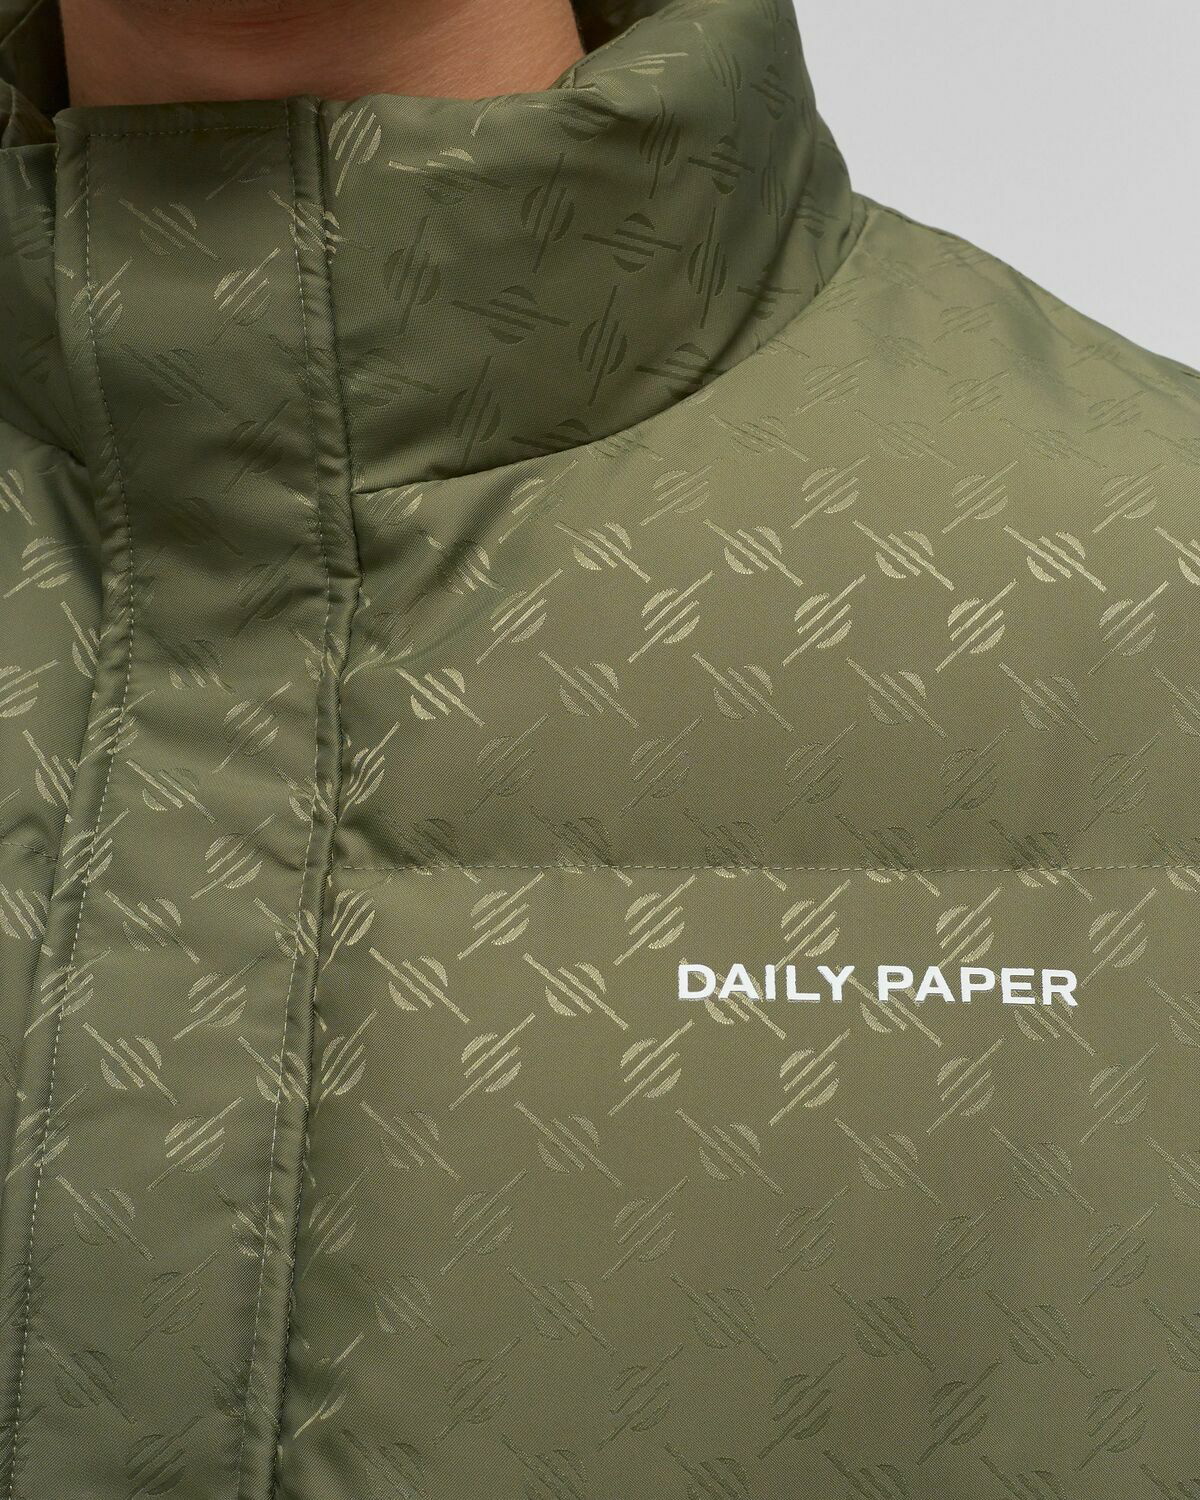 monogram-jacquard denim shirt jacket, Daily Paper